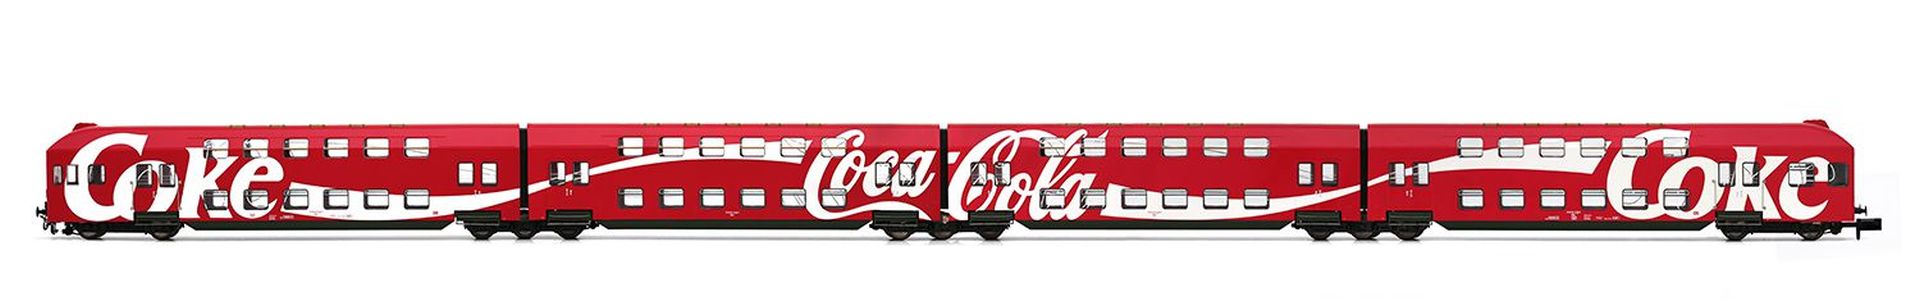 Arnold HN4471 - Doppelstockzug DBv mit Steuerabteil, DBAG, Ep.V 'Coca-Cola'